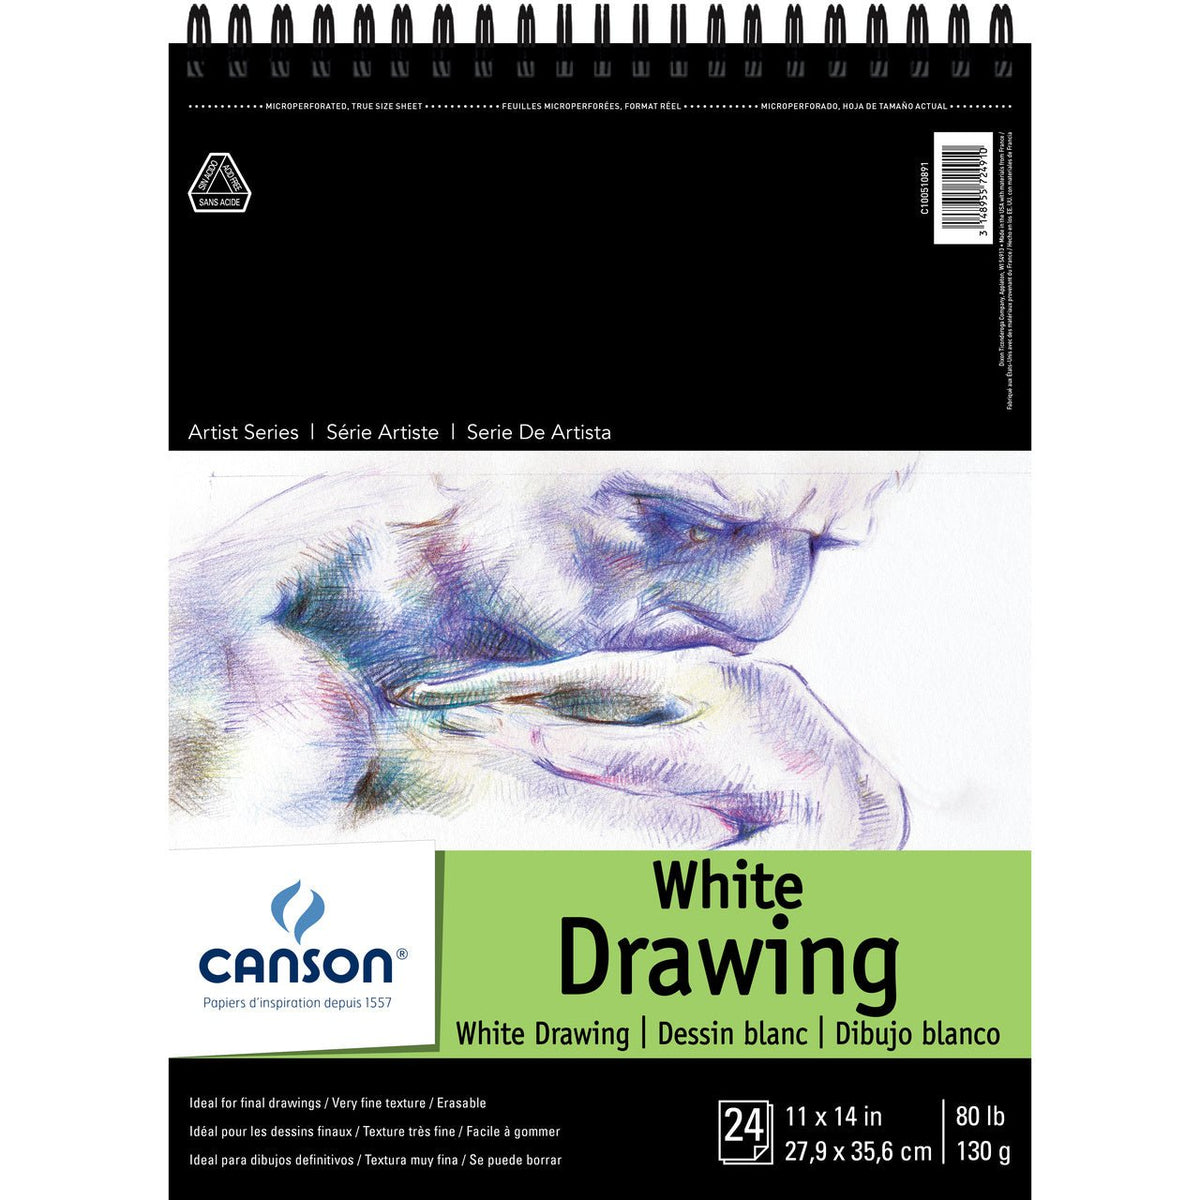 Pentalic - 8.5x 11 Traditional Hardbound Artist Sketchbook 